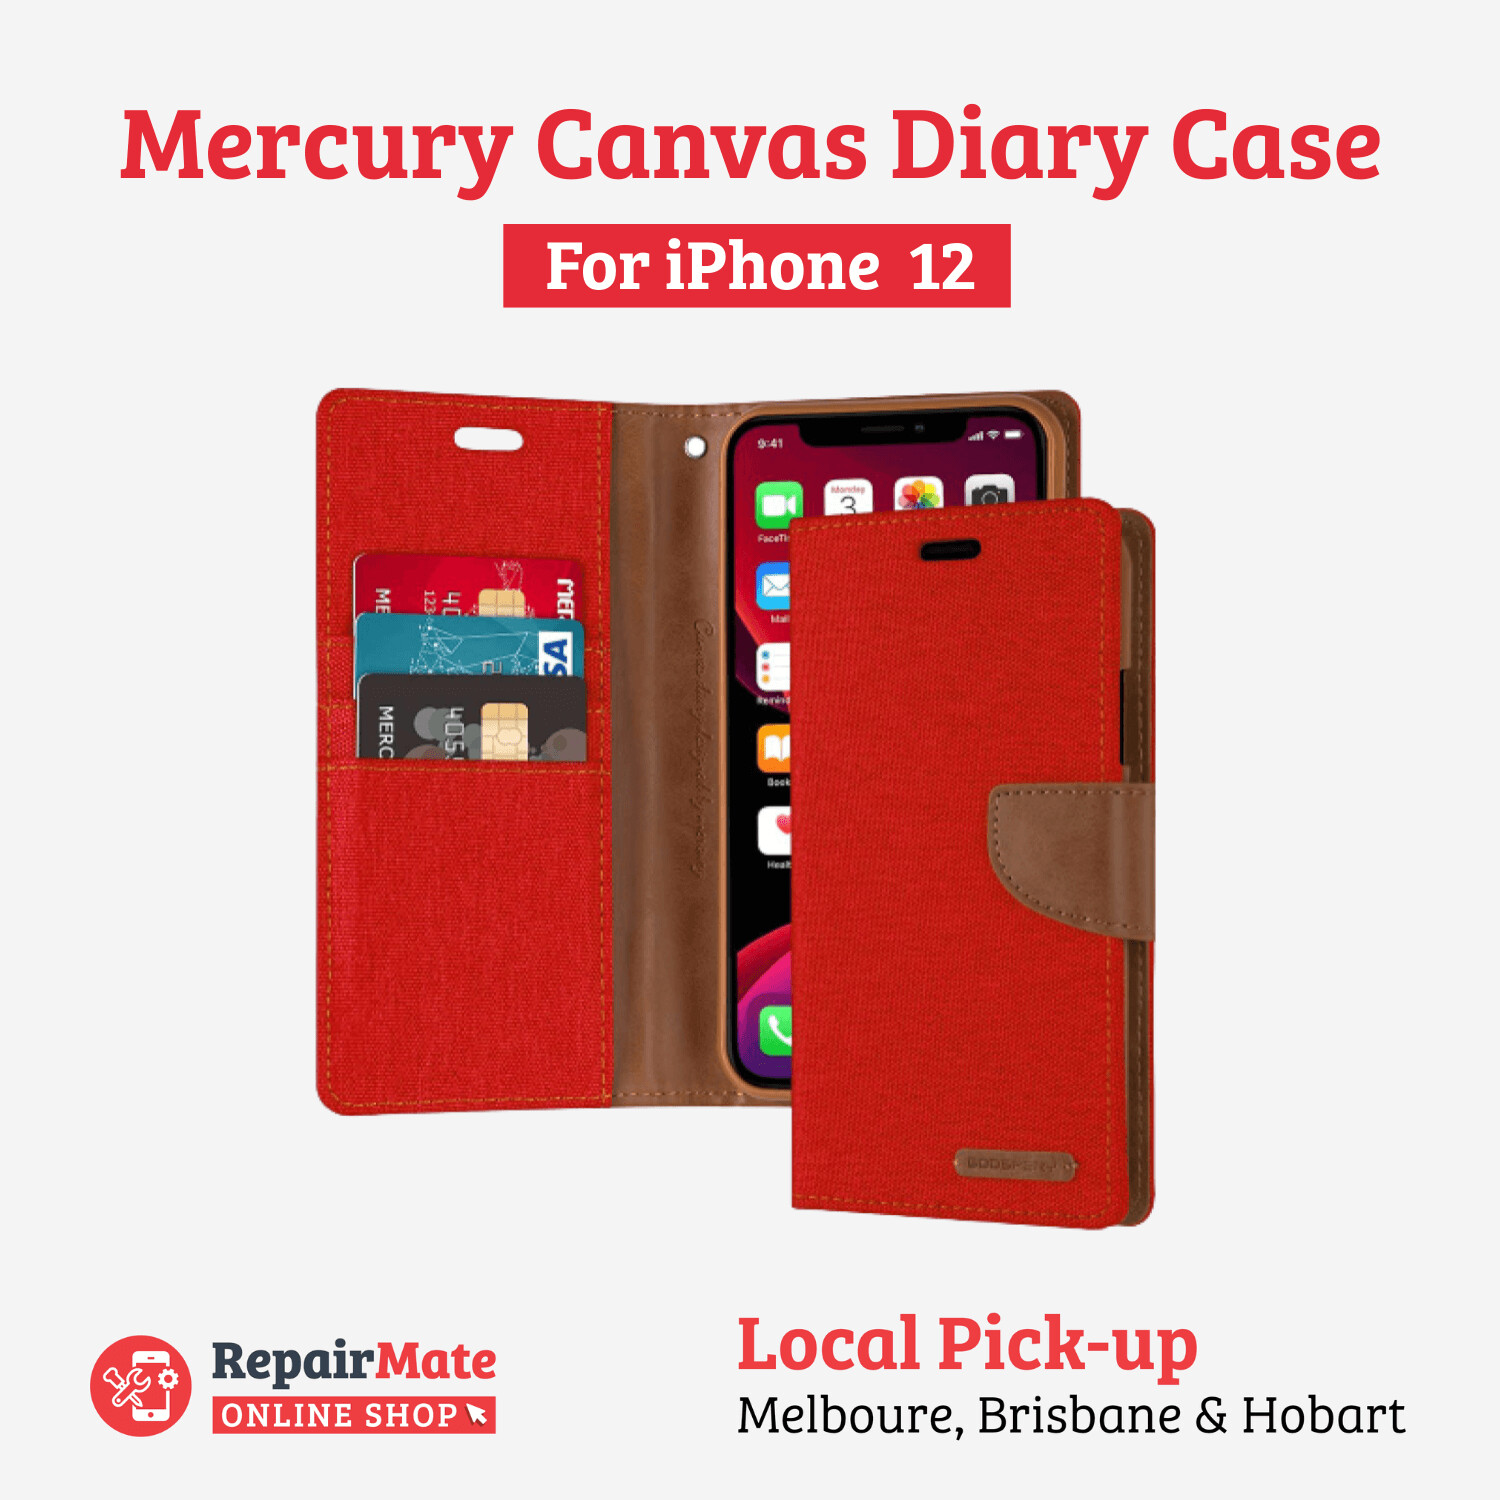 iPhone 12 Mercury Canvas Foldable Diary Case